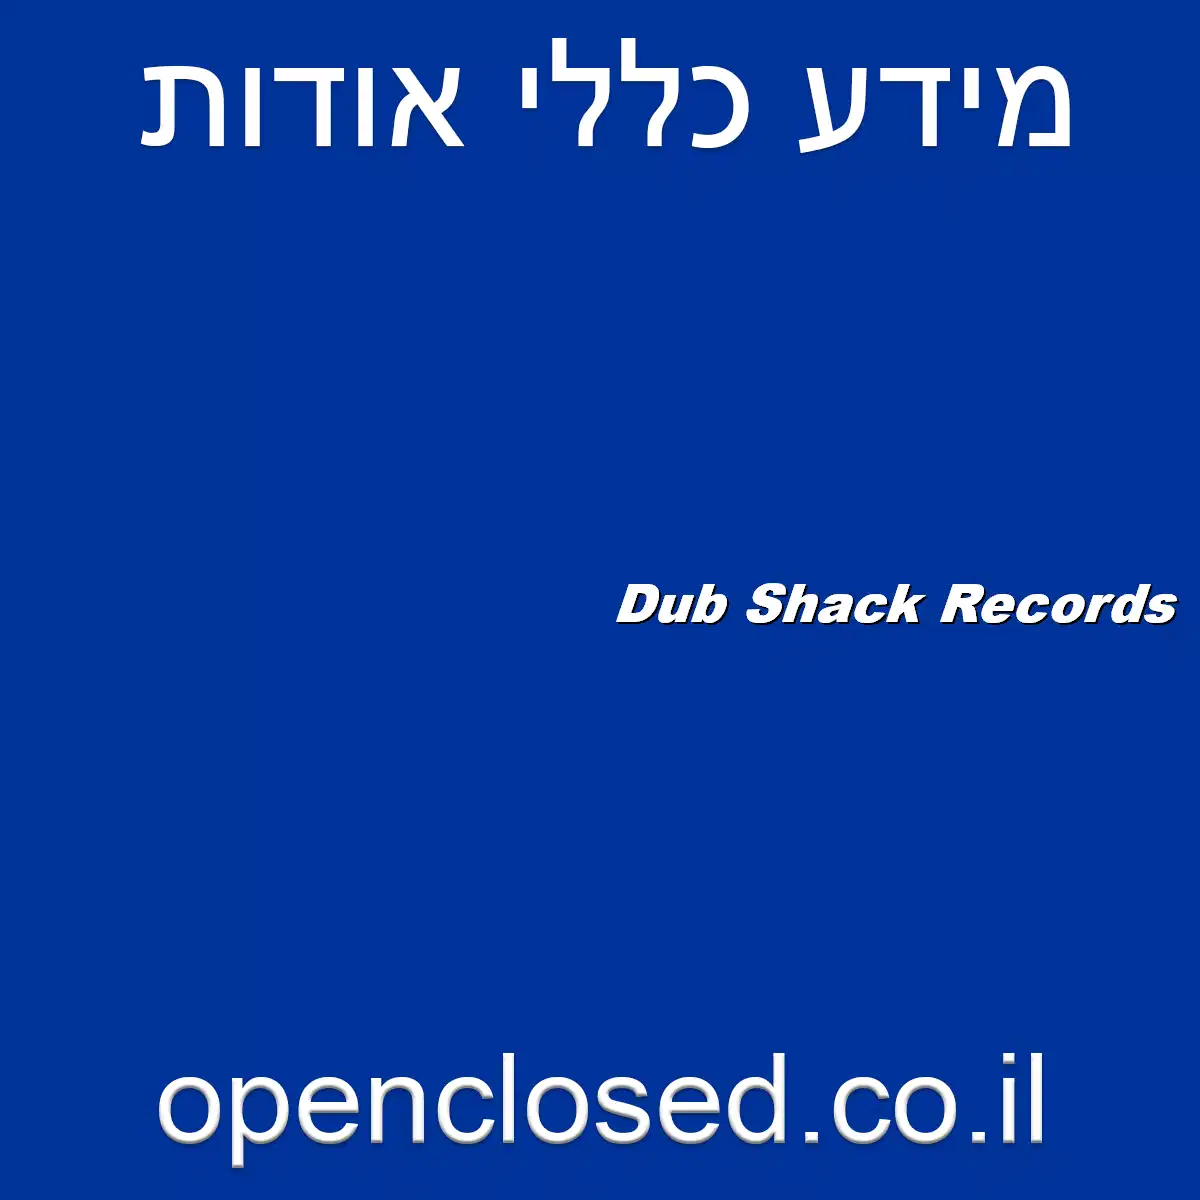 Dub Shack Records